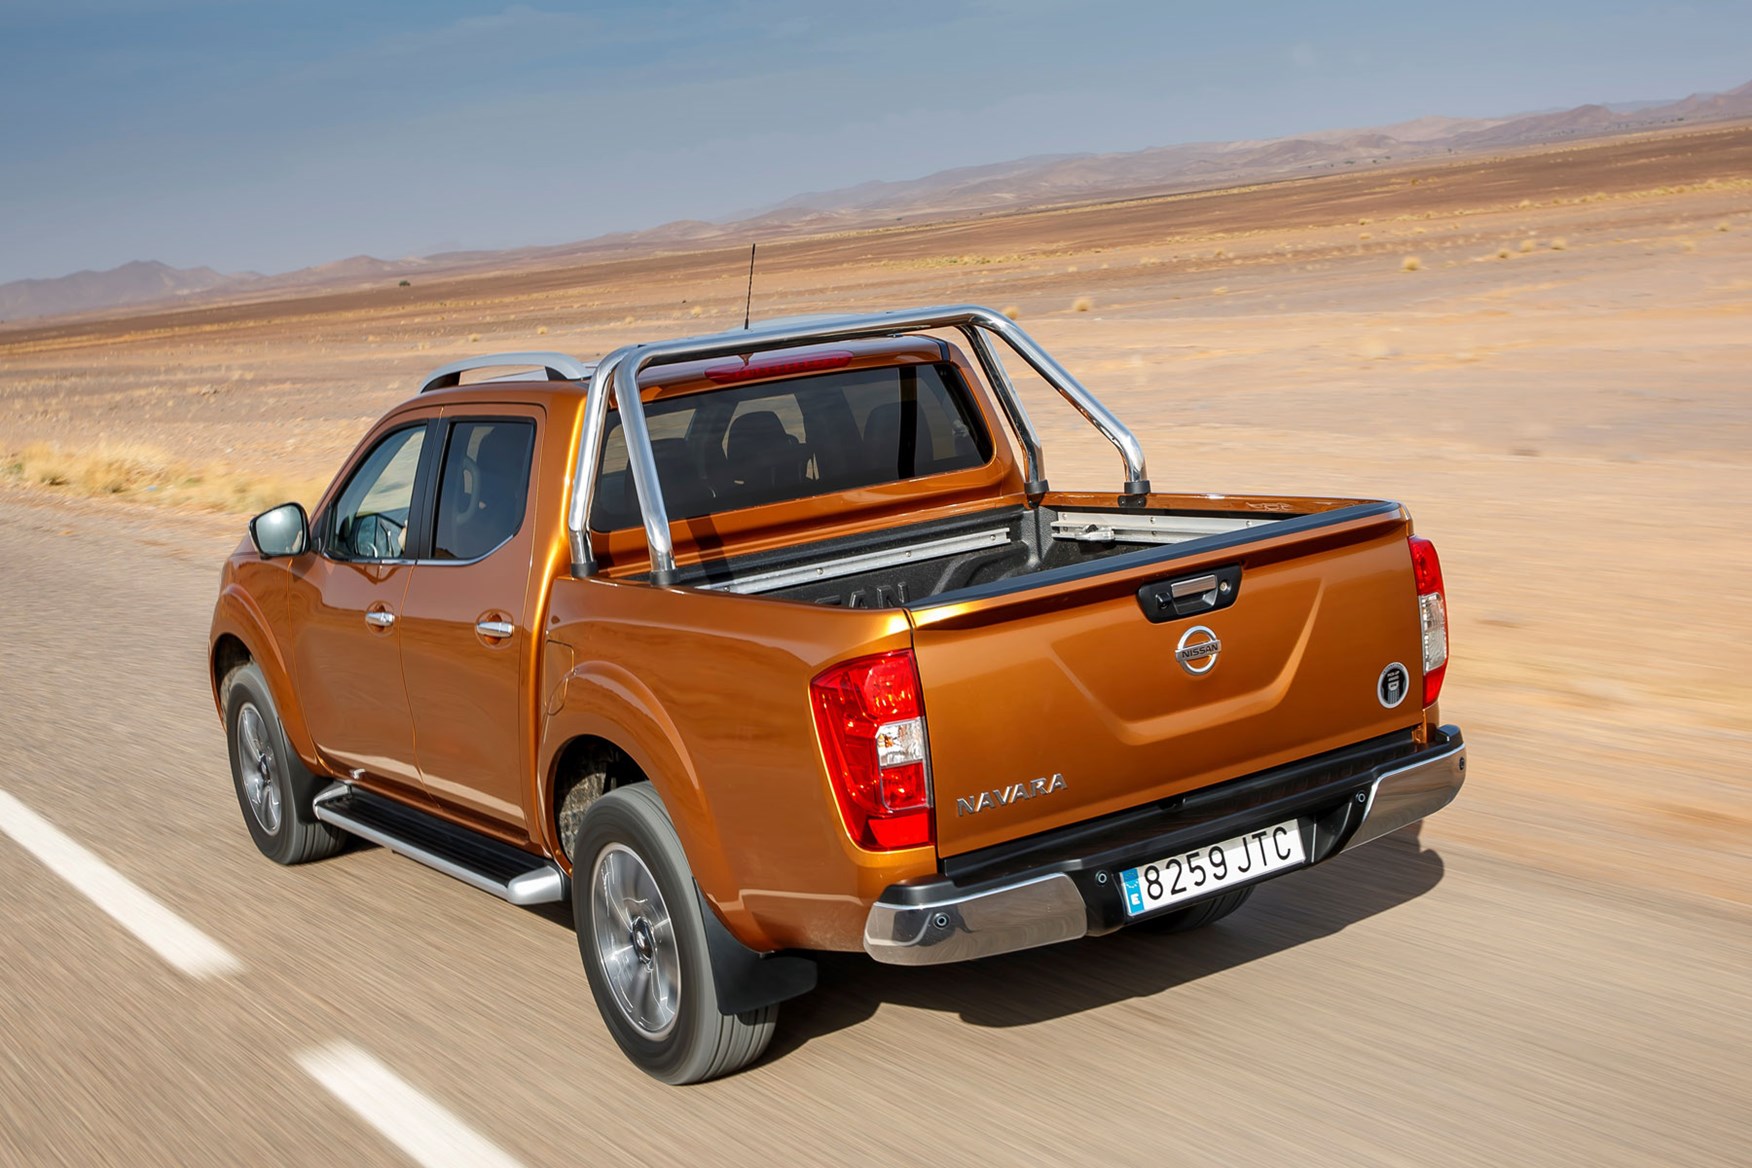 Nissan Navara Tekna review - rear view, driving on road, orange